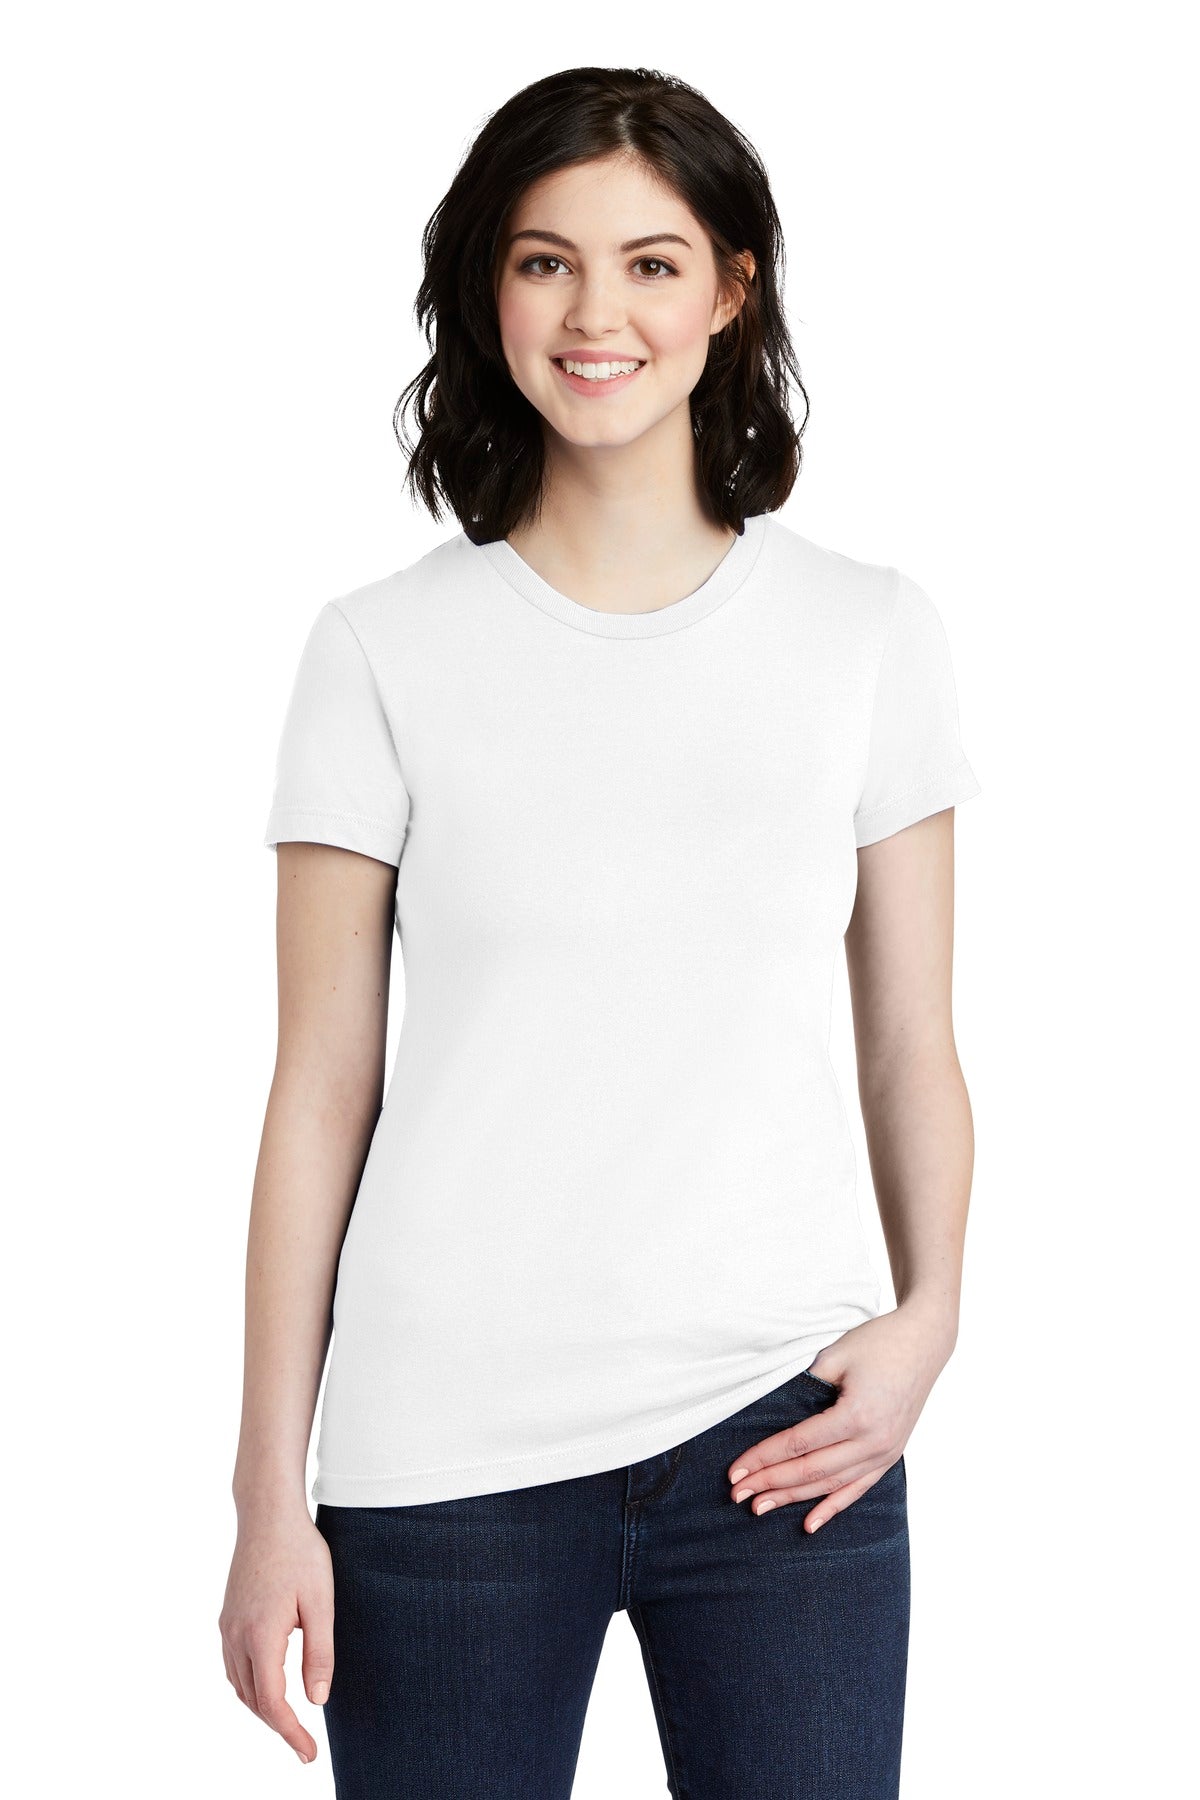 American Apparel ® Women's Fine Jersey T-Shirt. 2102W - DFW Impression